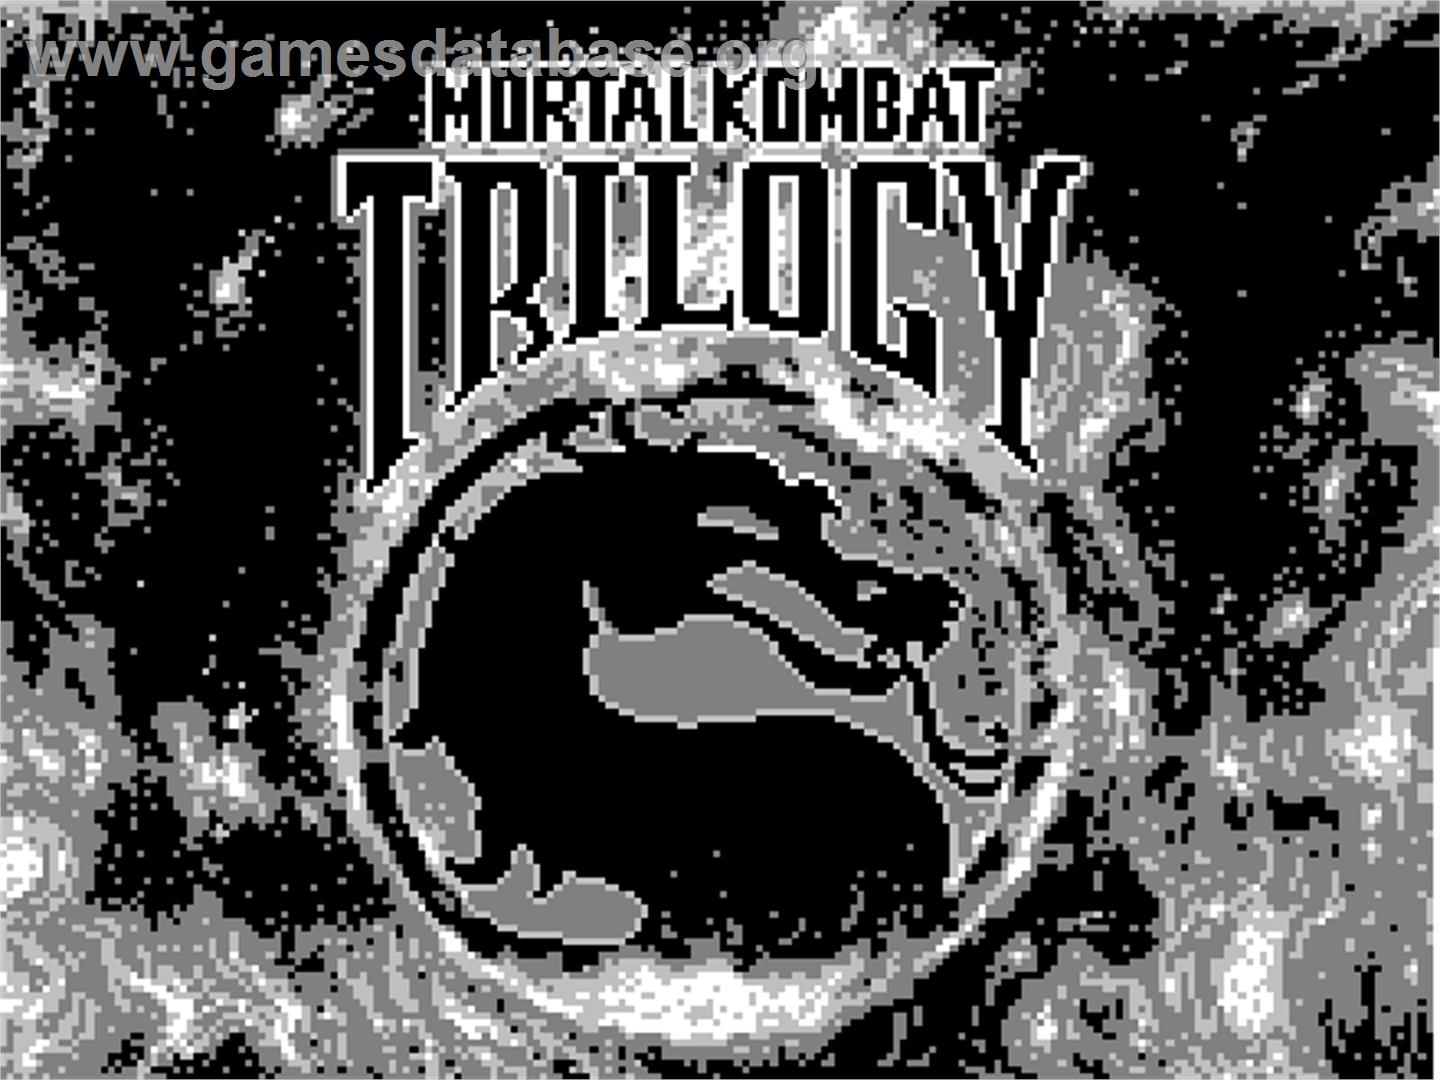 Mortal Kombat Trilogy - Tiger Game.com - Artwork - Title Screen